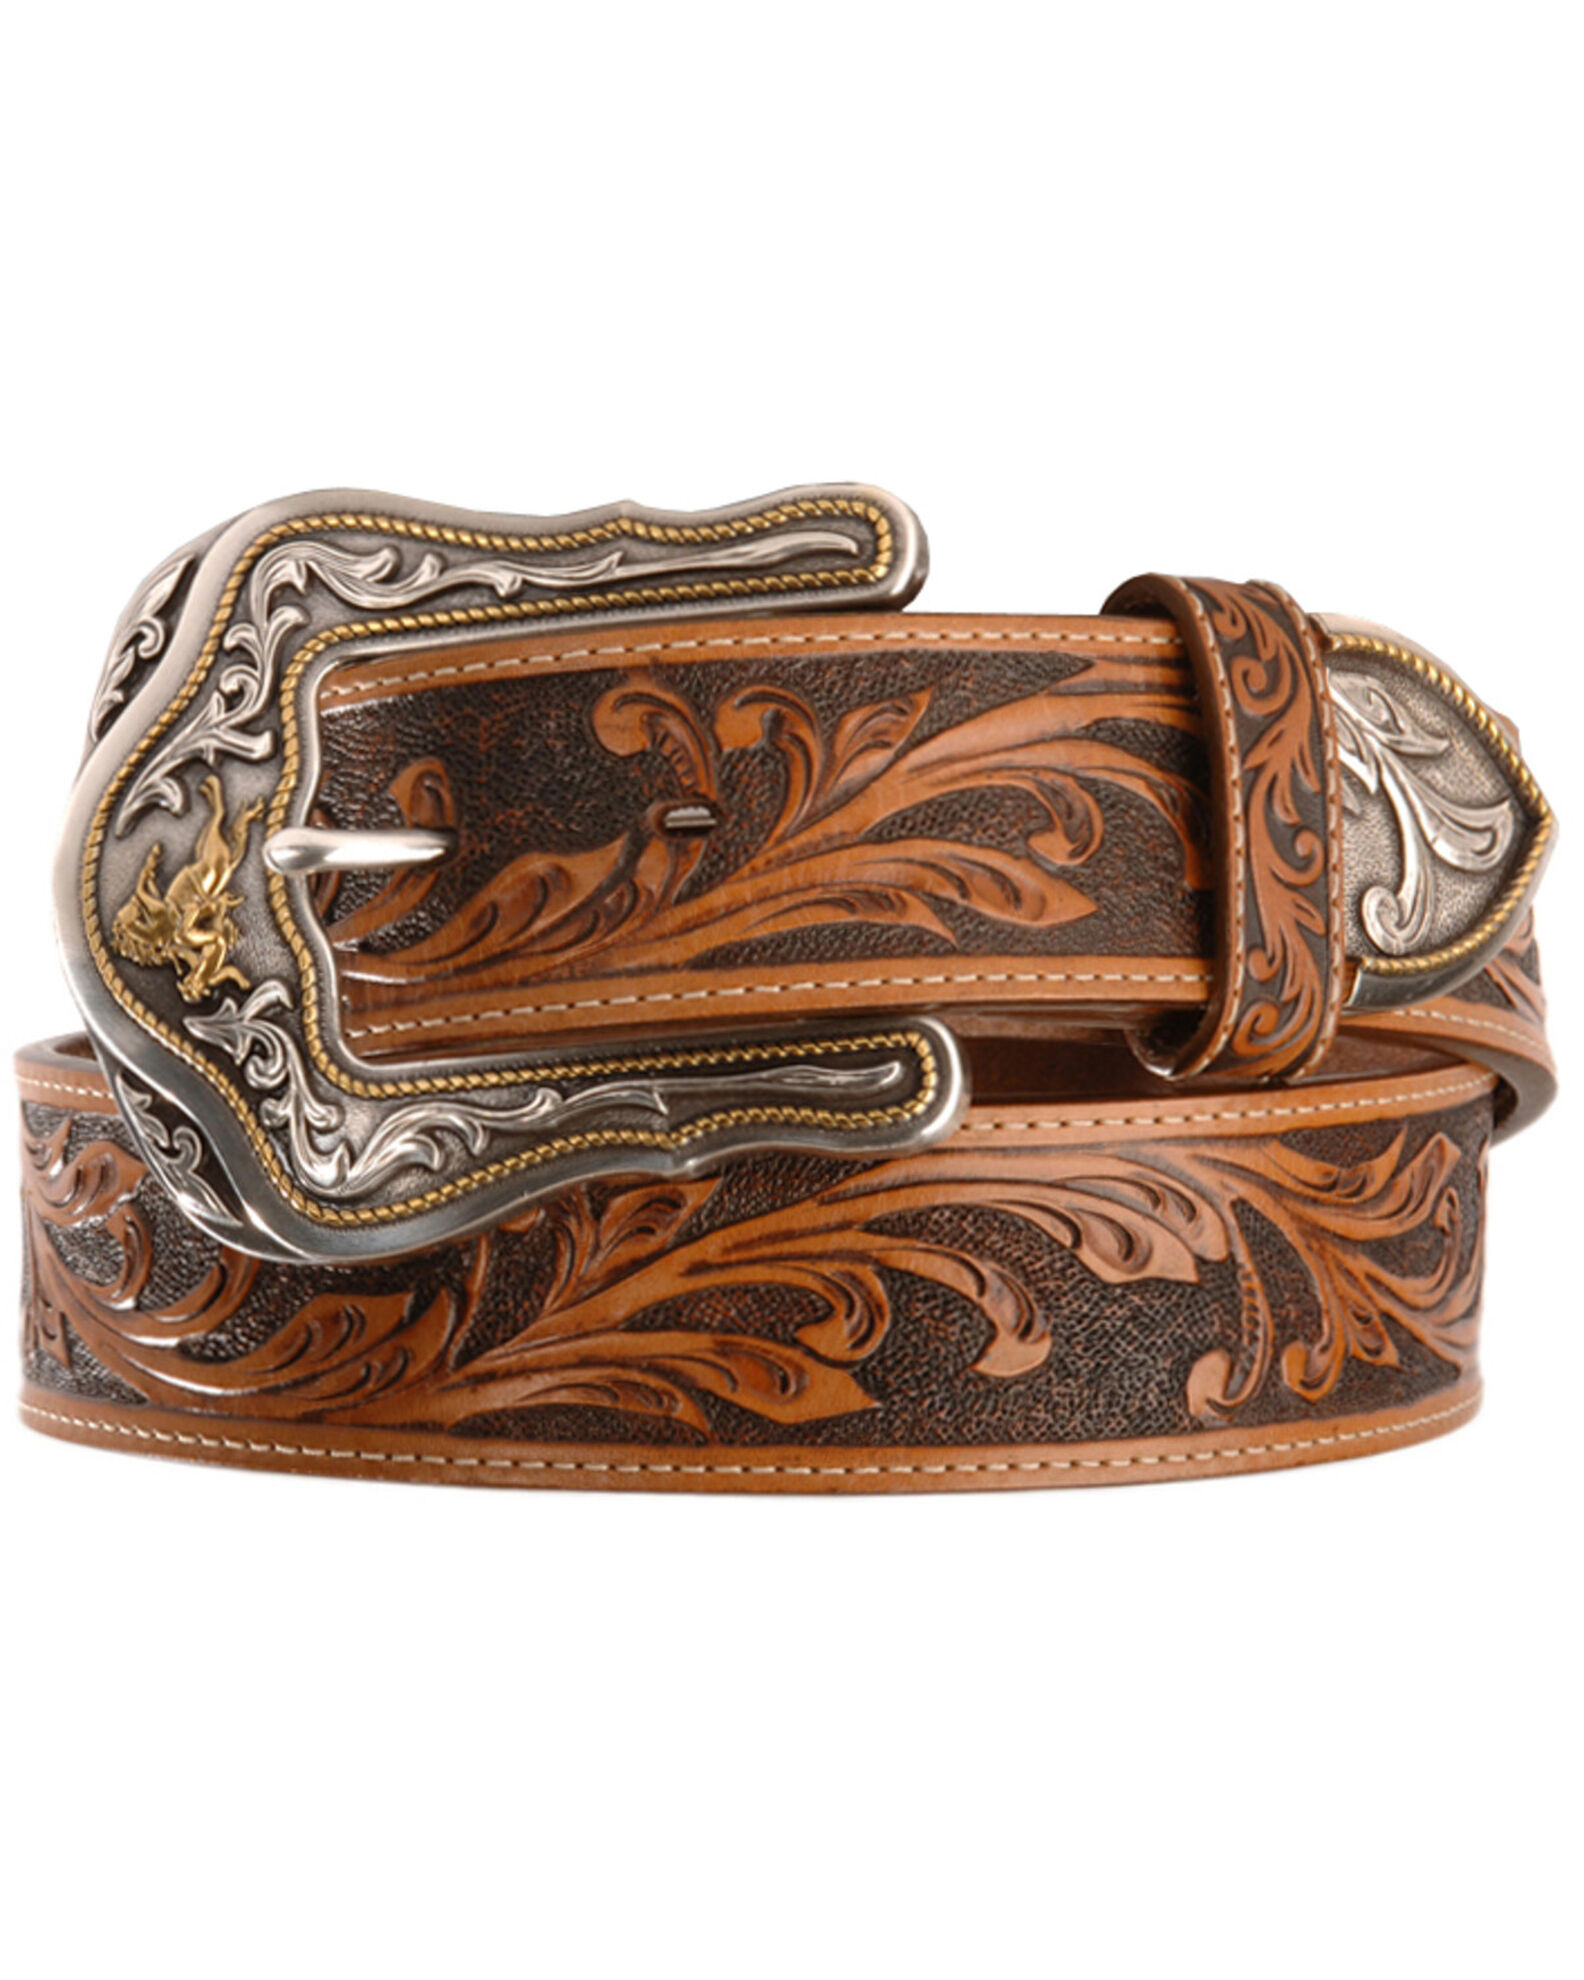 TONY LAMA Western Design Leather Belt